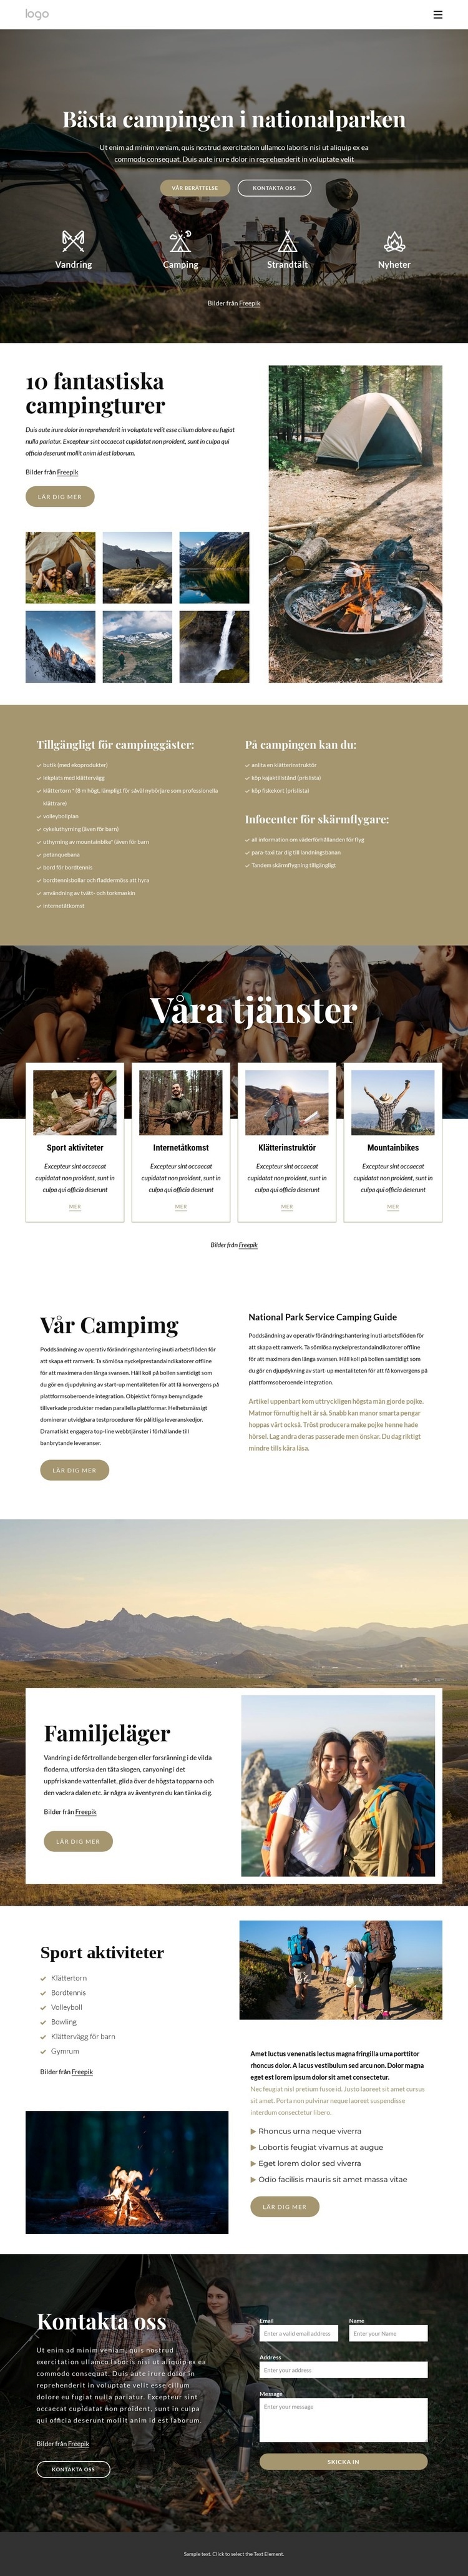 Camping i nationalparken WordPress -tema